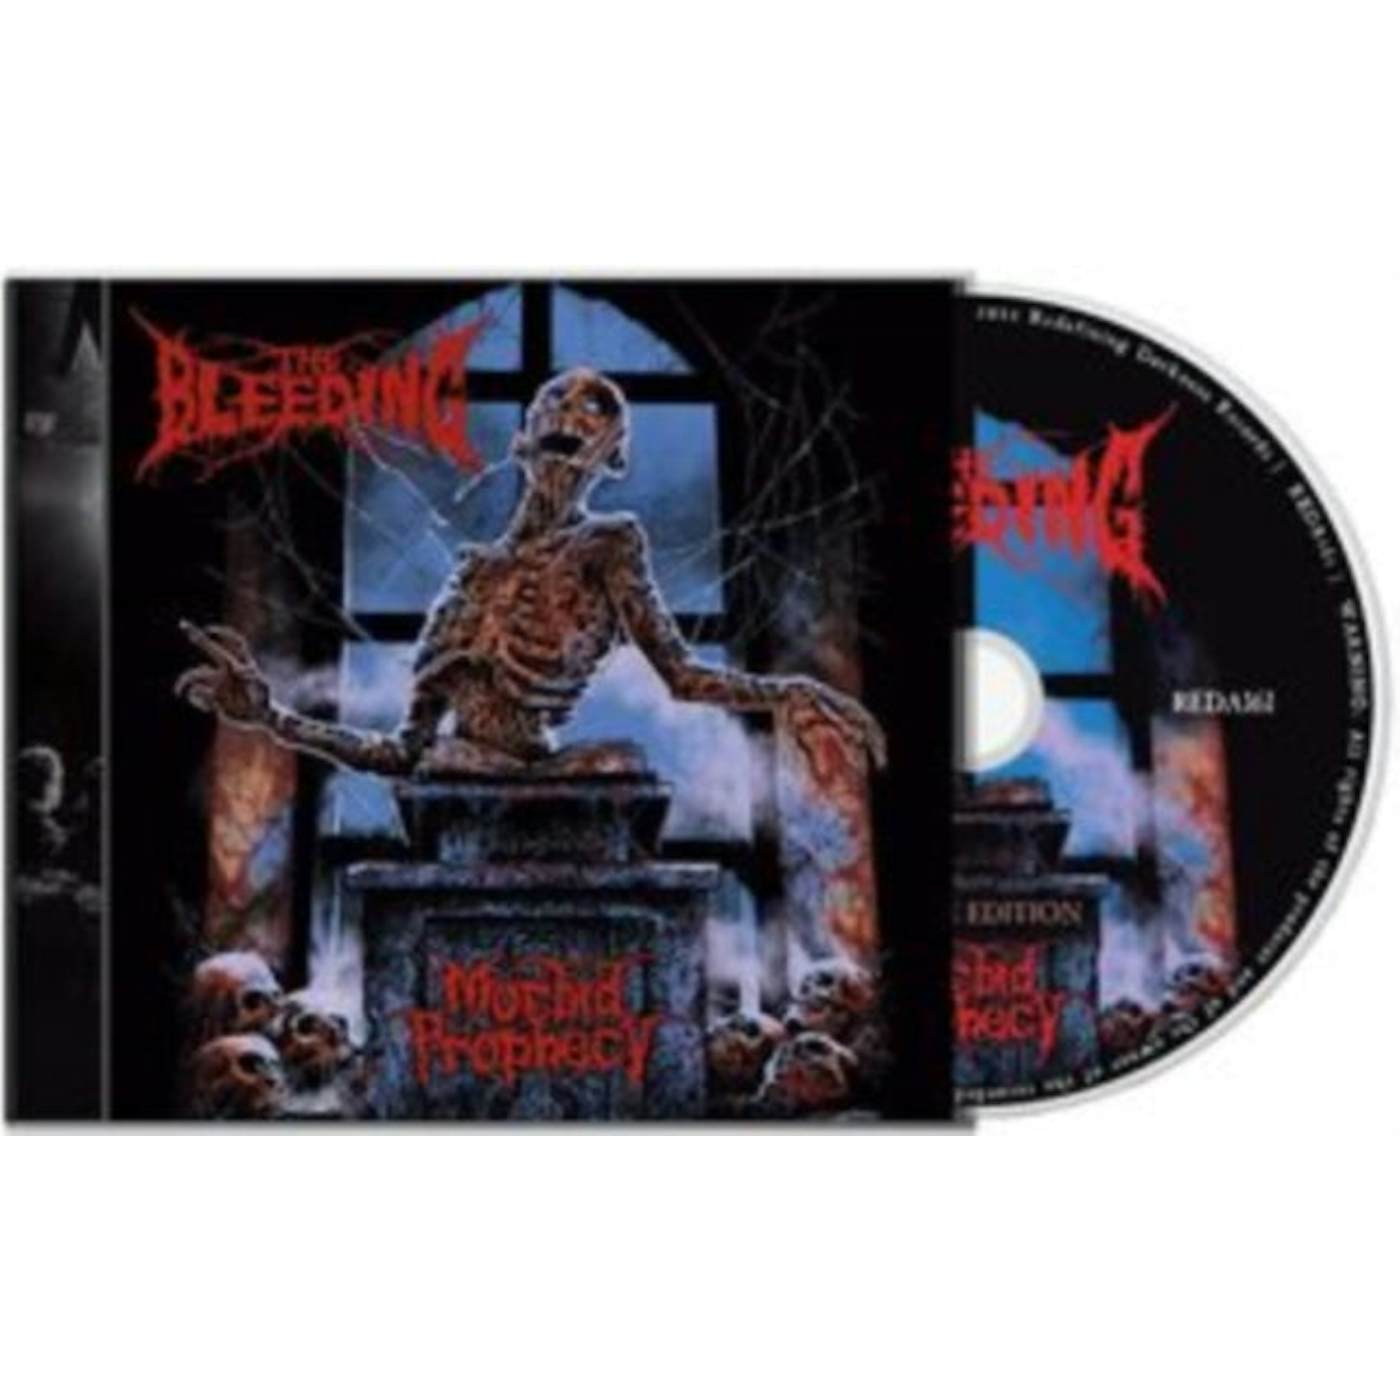 The Bleeding CD - Morbid Prochecy [Deluxe Edition]